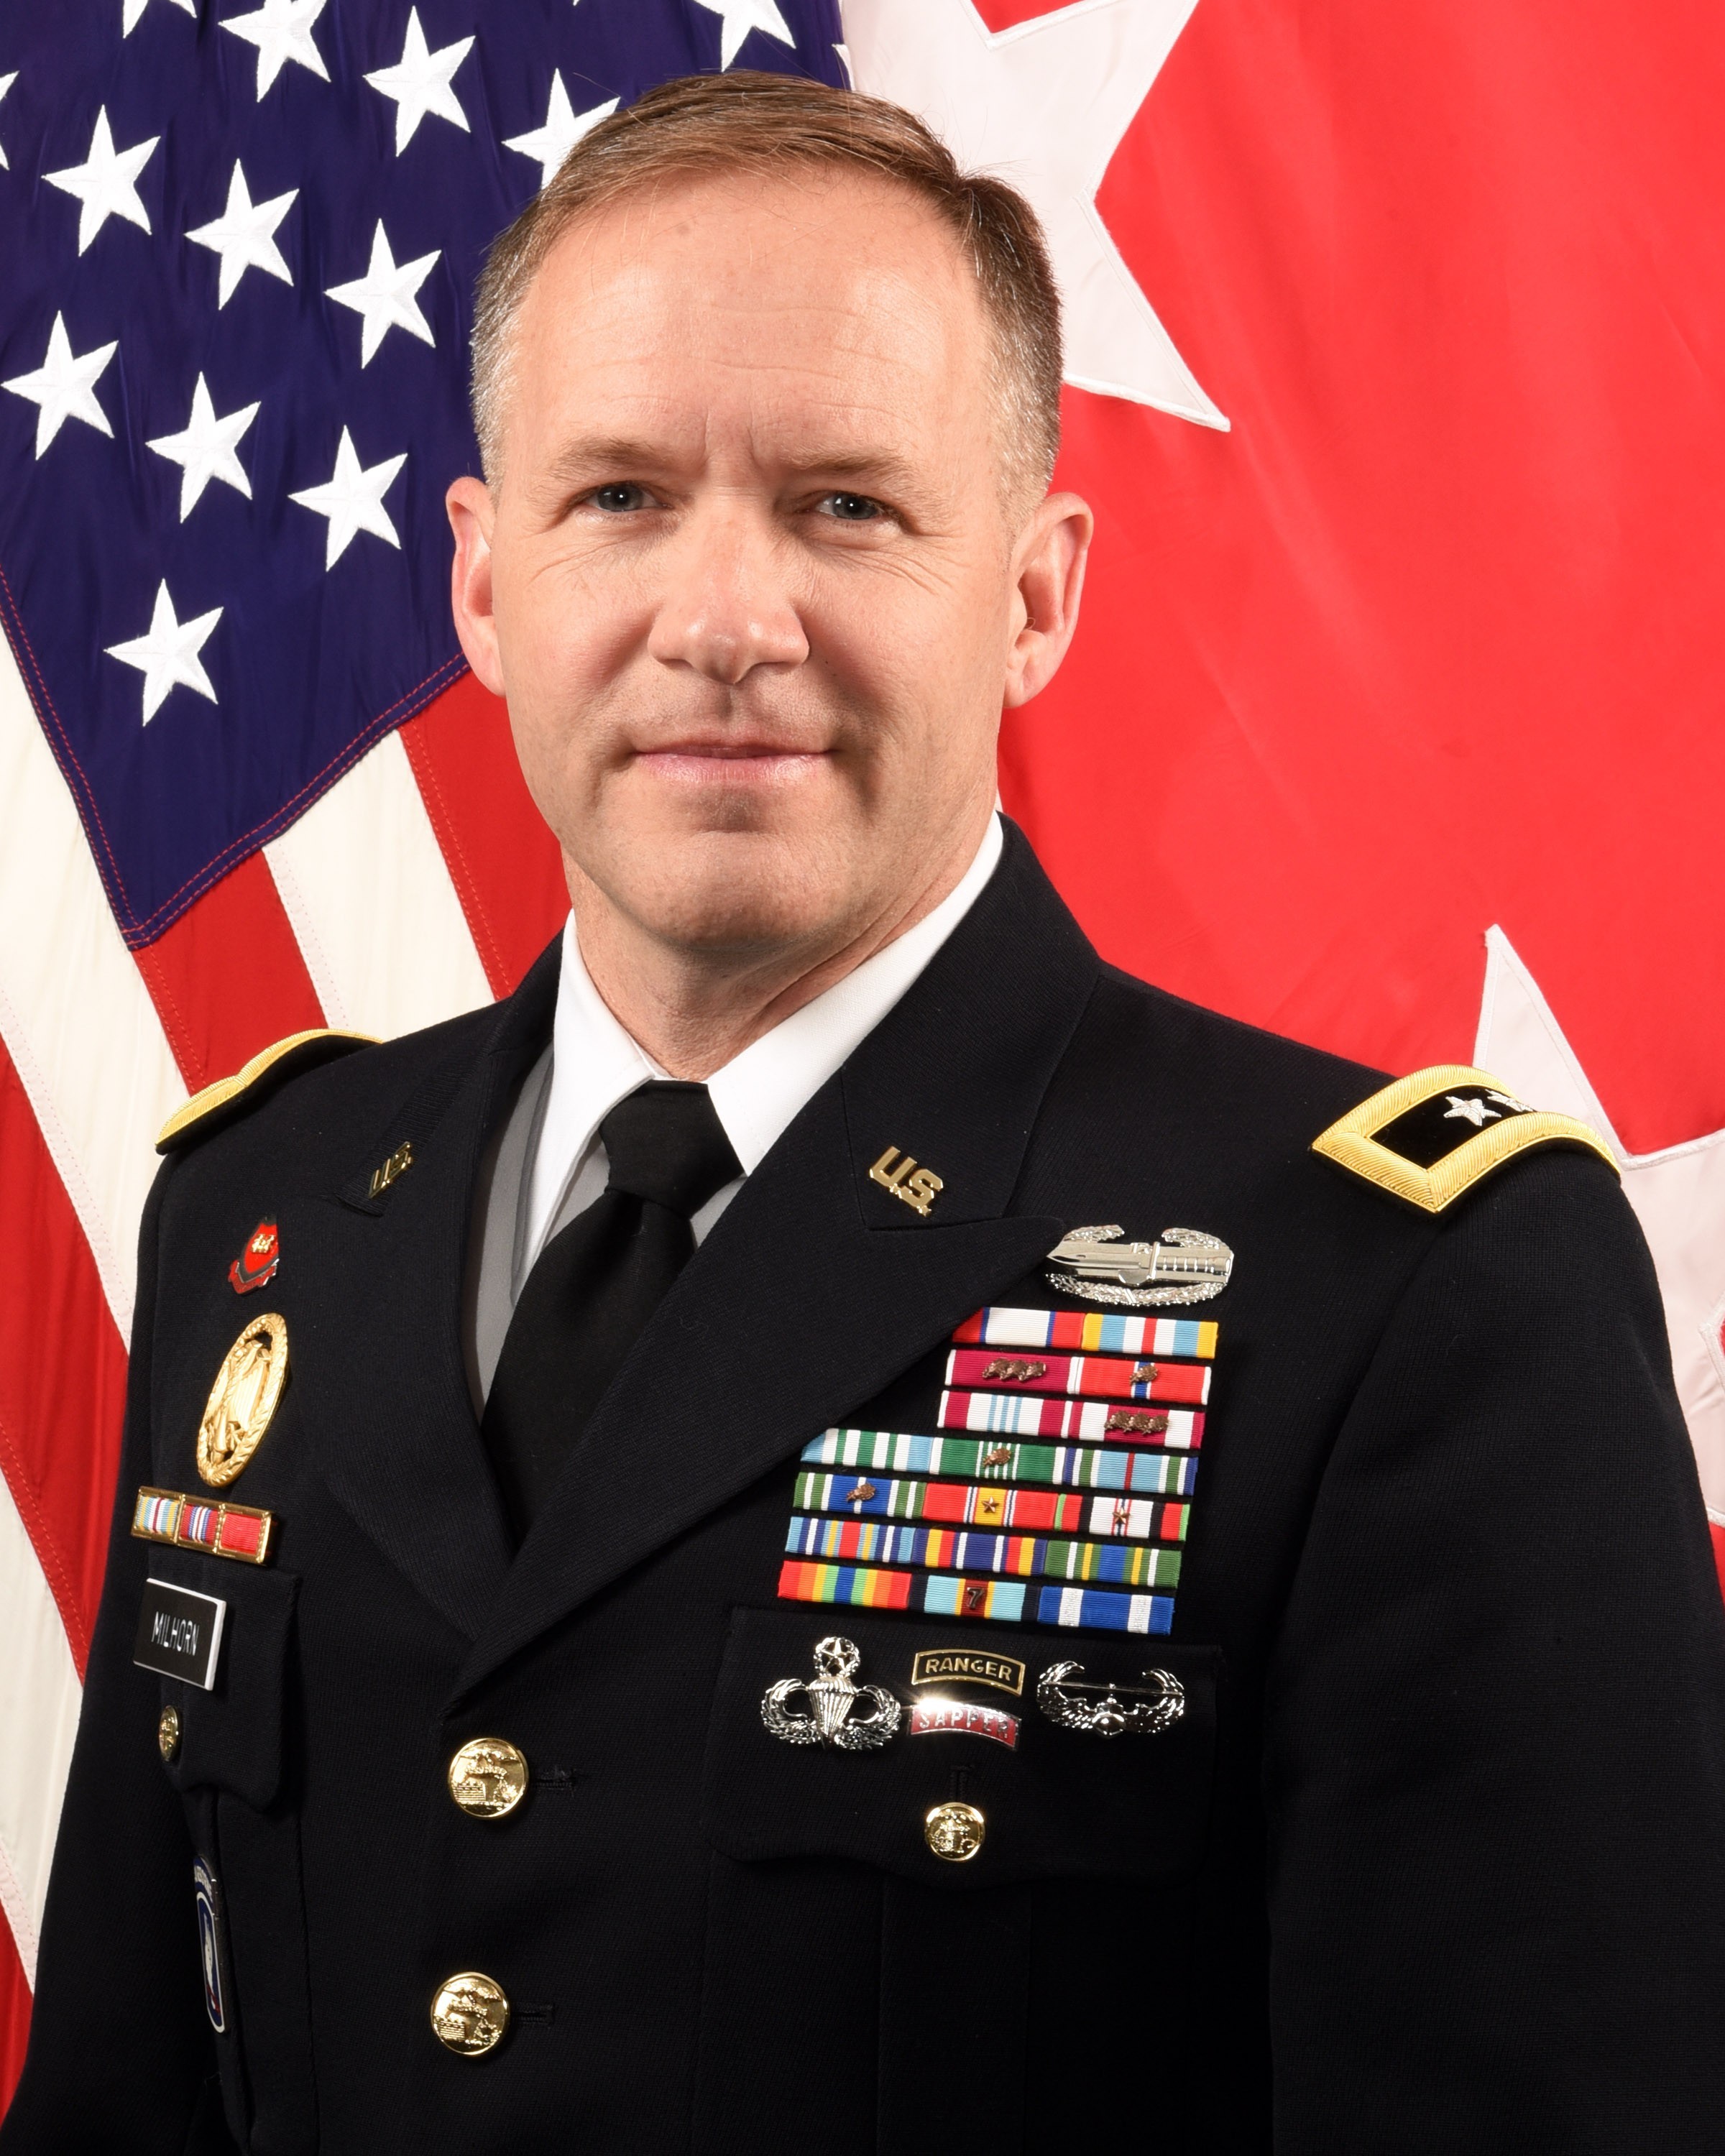 Major General Jeffrey L. Milhorn